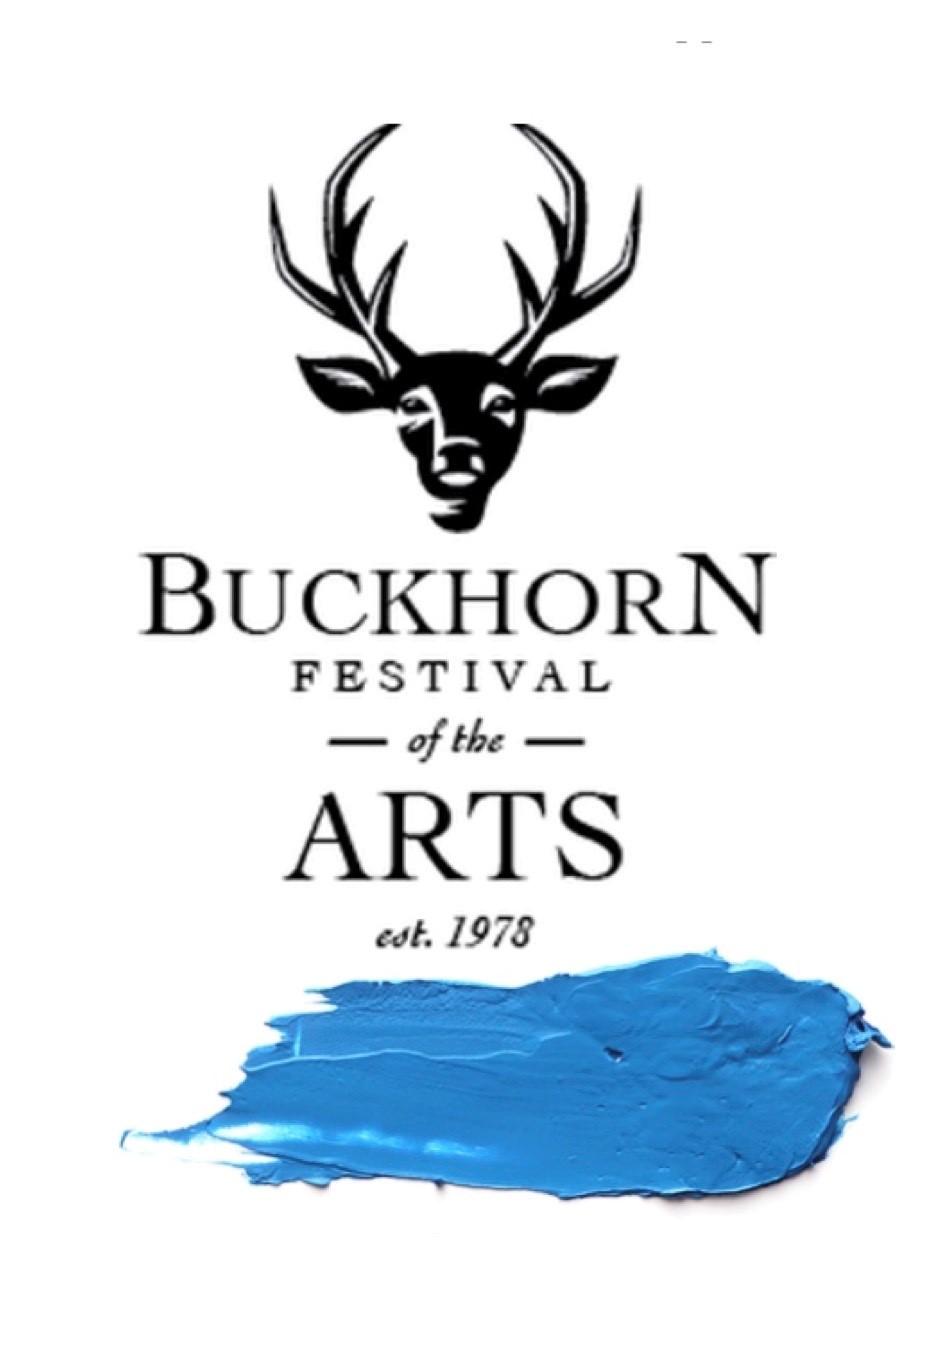 Buckhorn Festival of the Arts - image